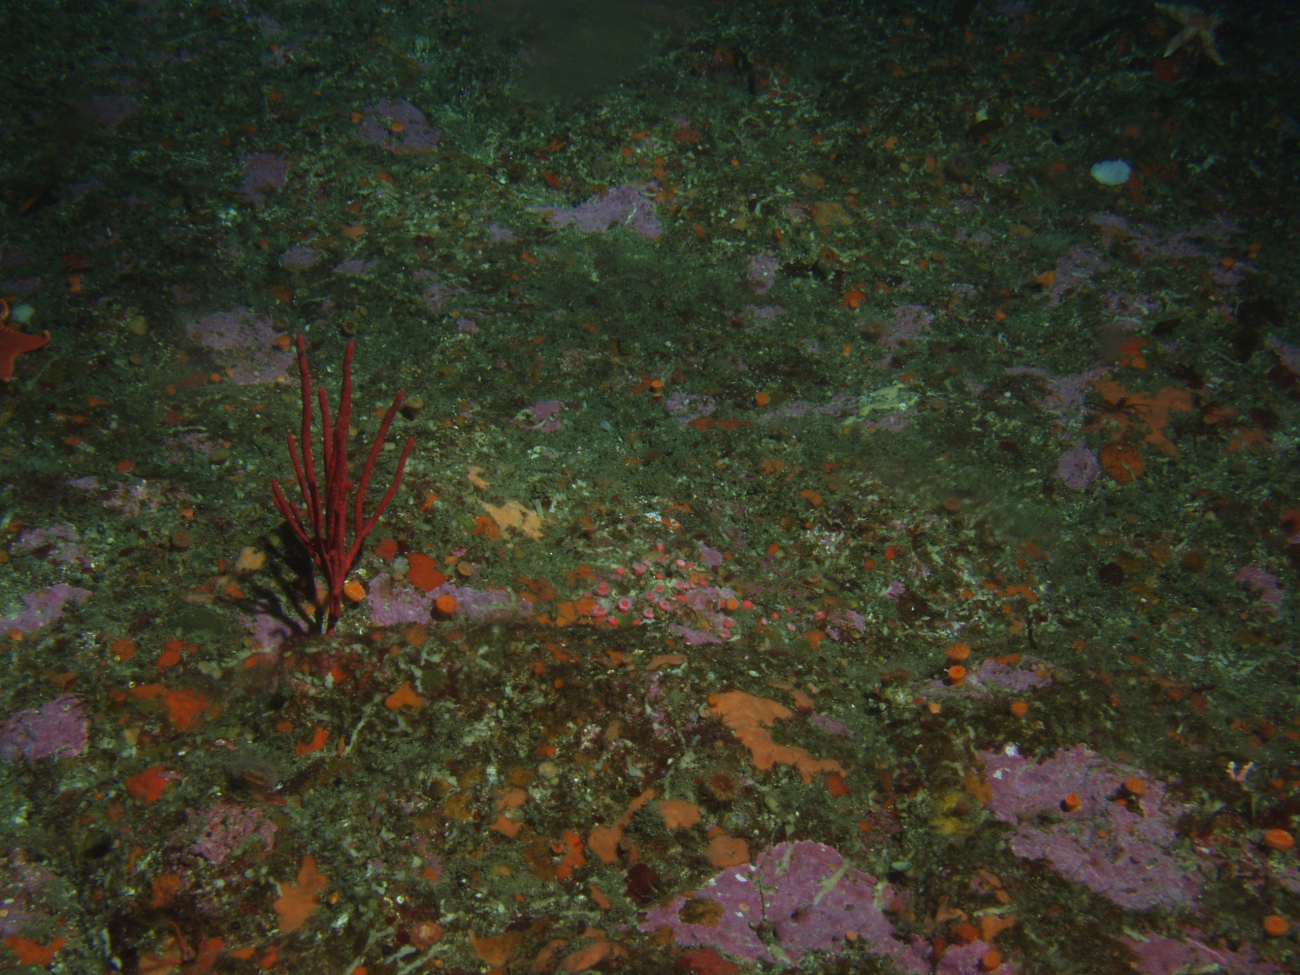 Gorgonian coral (Lophogorgia sp